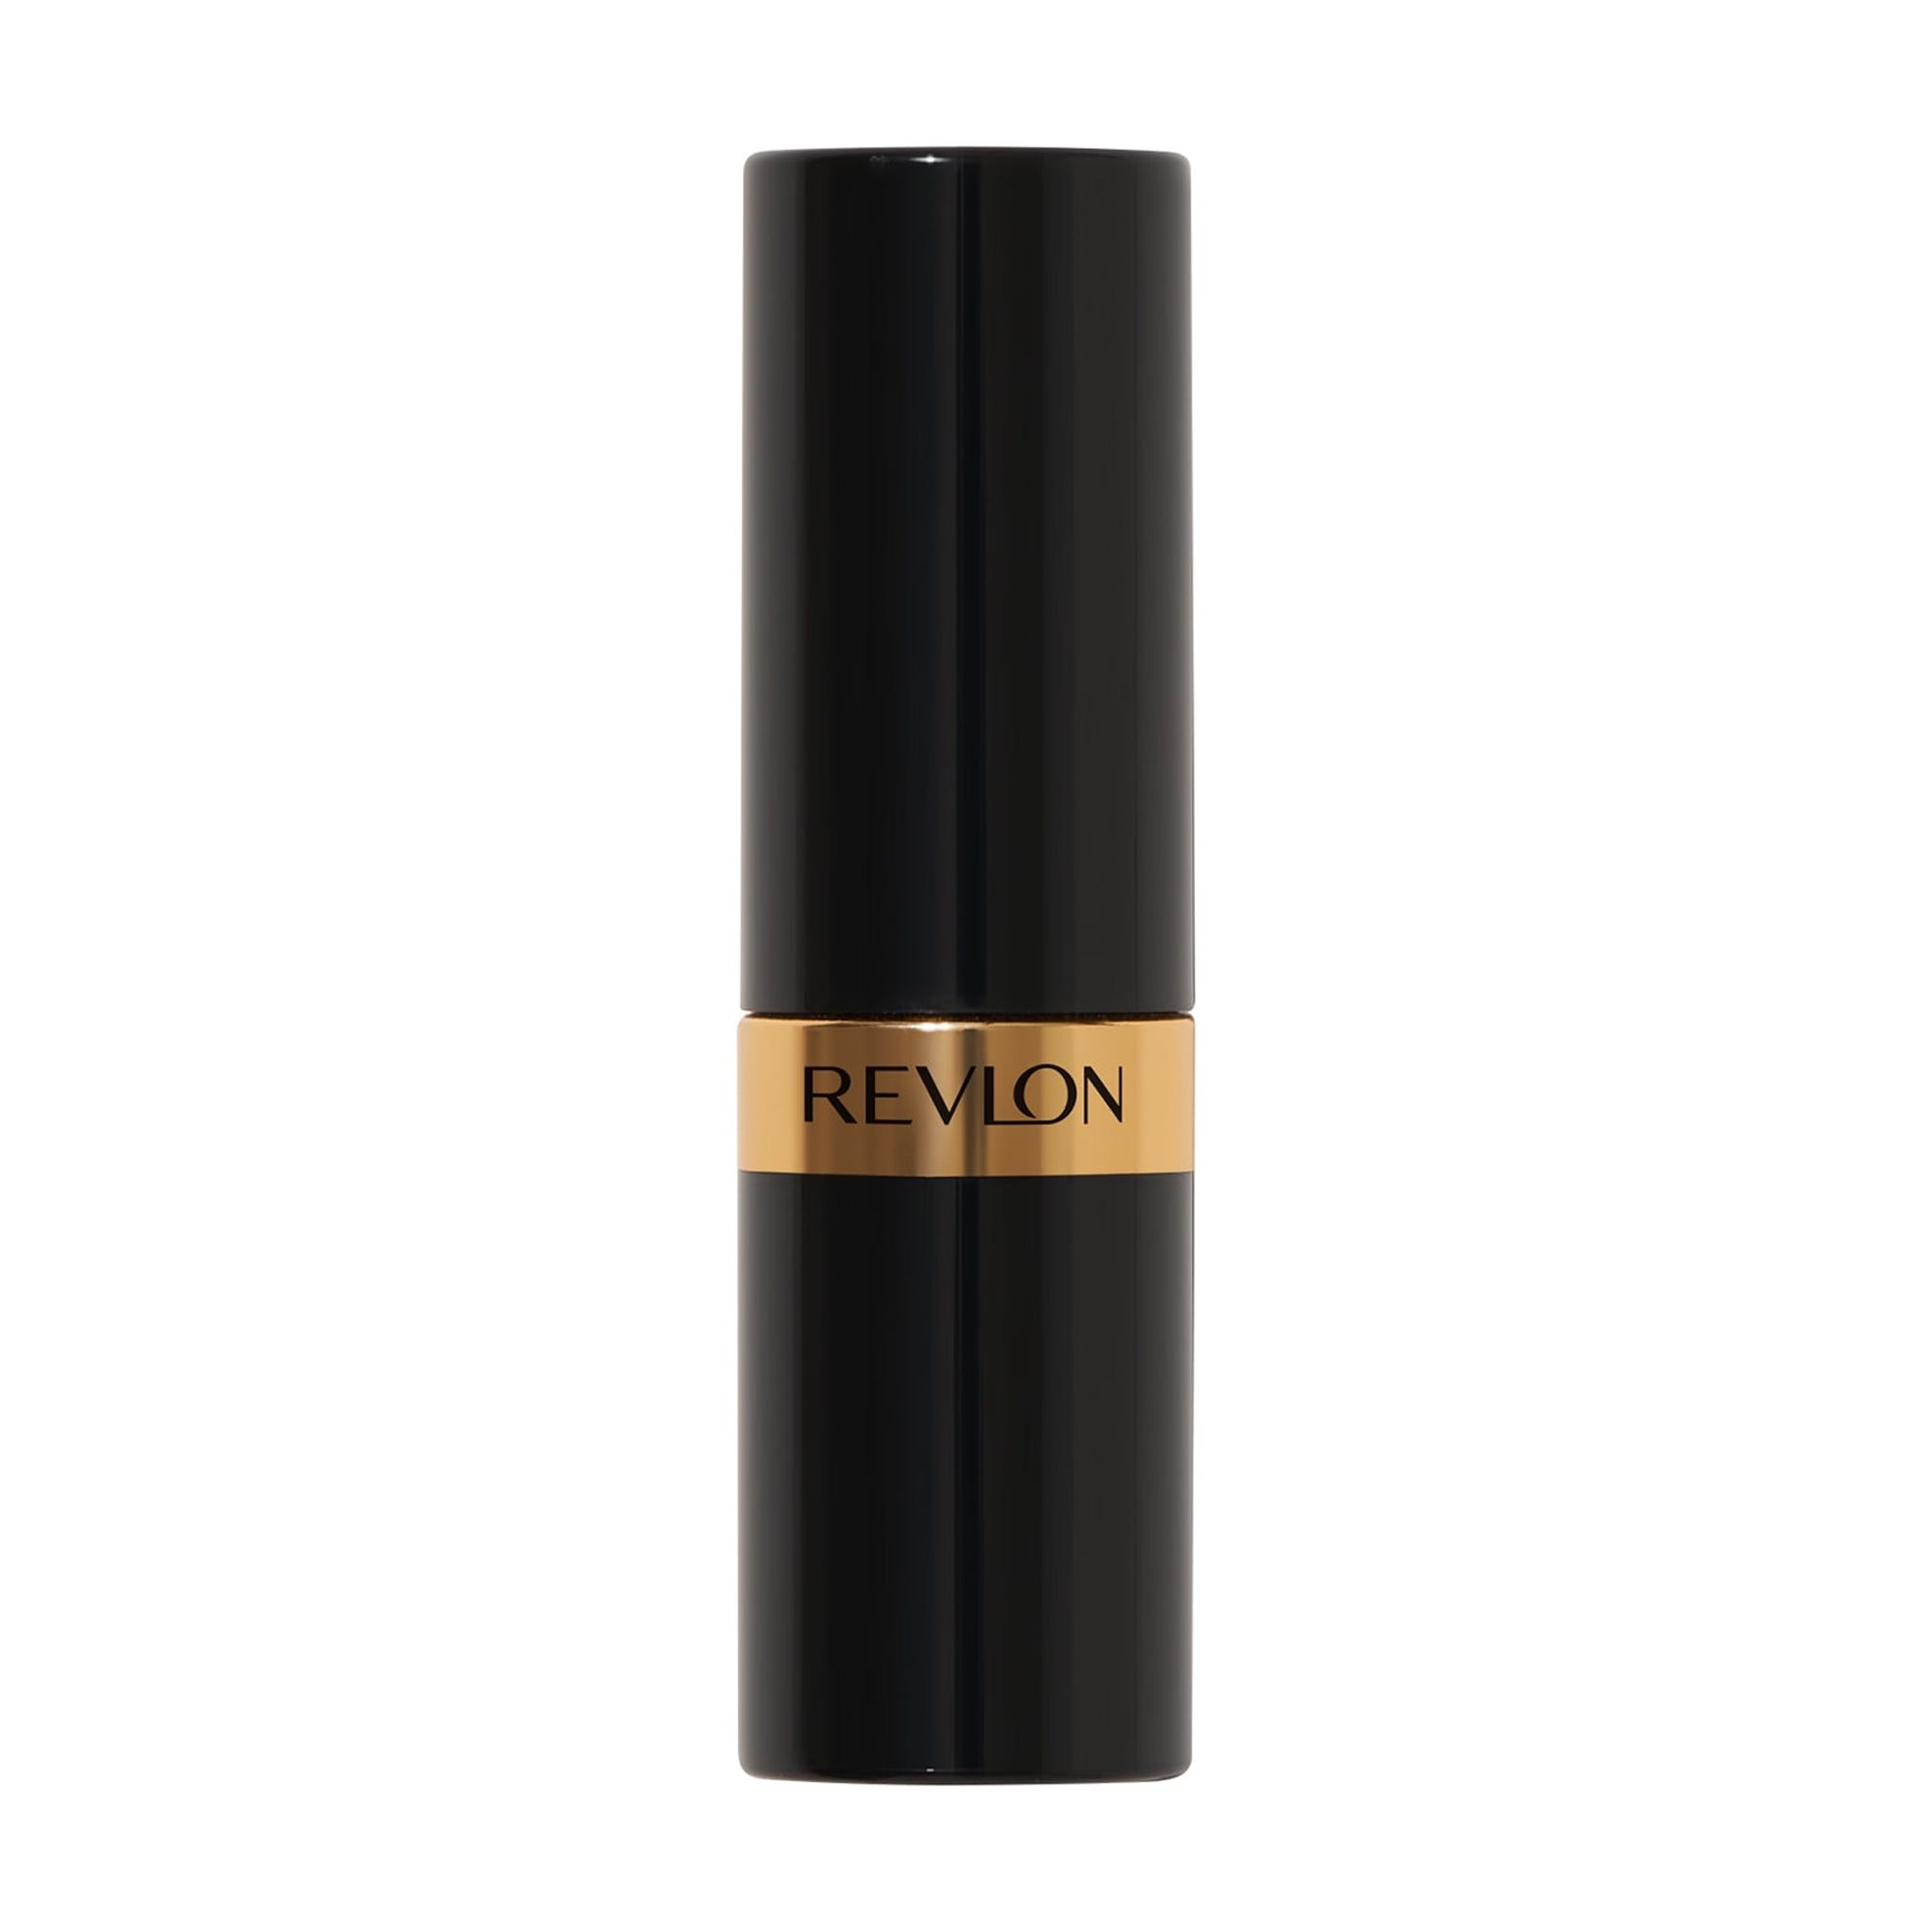 Revlon Super Lustrous Lipstick, Nude Attitude - image 6 of 7